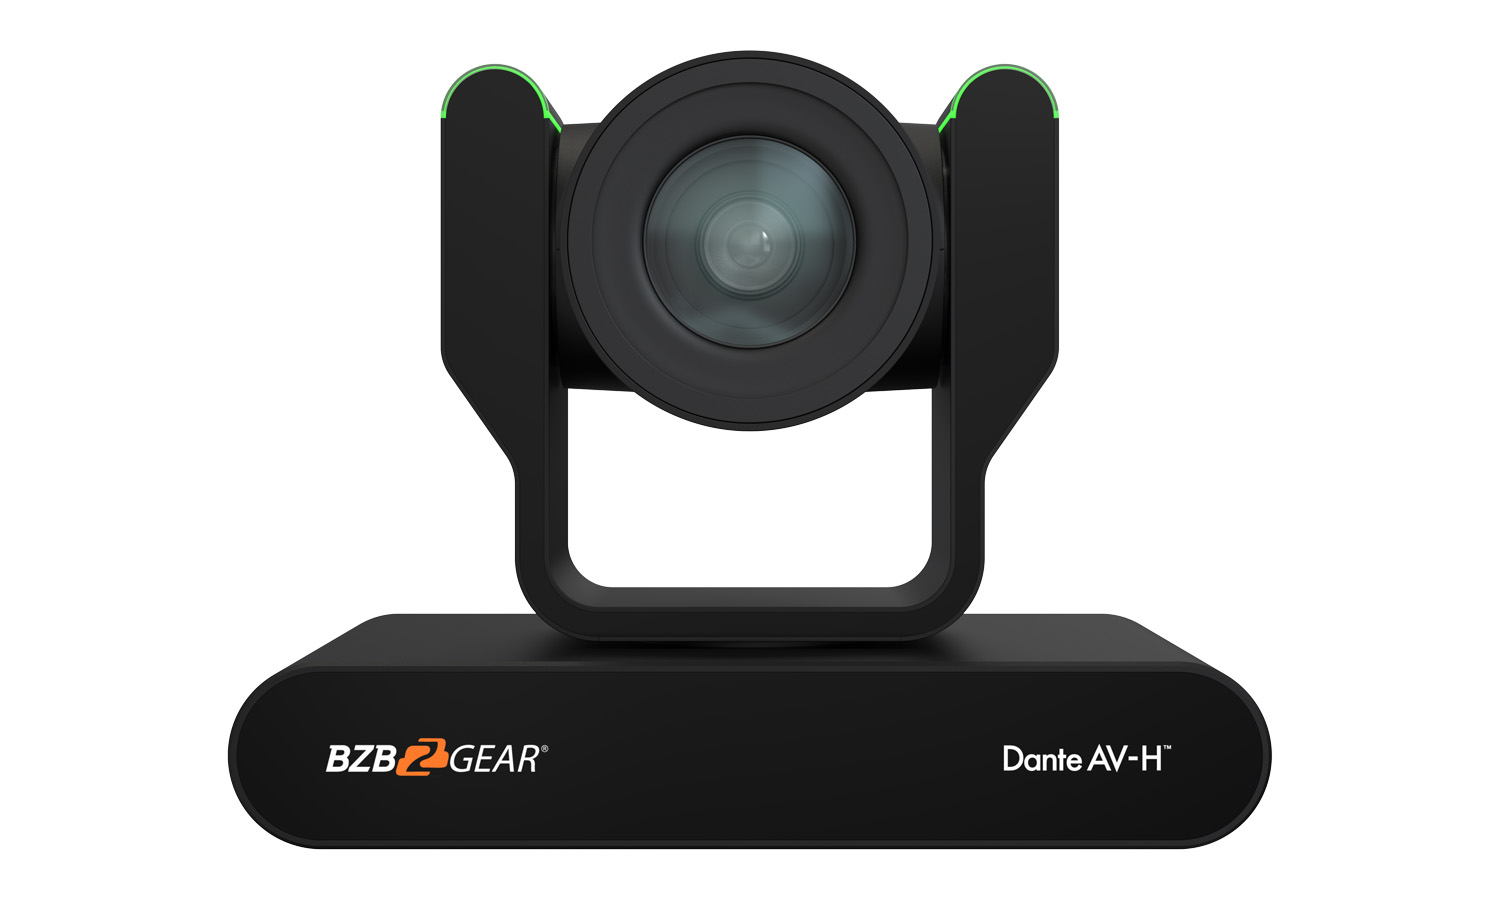 BG-ADAMO-JRDA30X-B 30X 1080P FHD AUTO TRACKING HDMI/3G-SDI/USB 2.0/USB 3.0 Dante AV-H Live Streaming PTZ Camera with Tally Lights (Black) by BZBGEAR